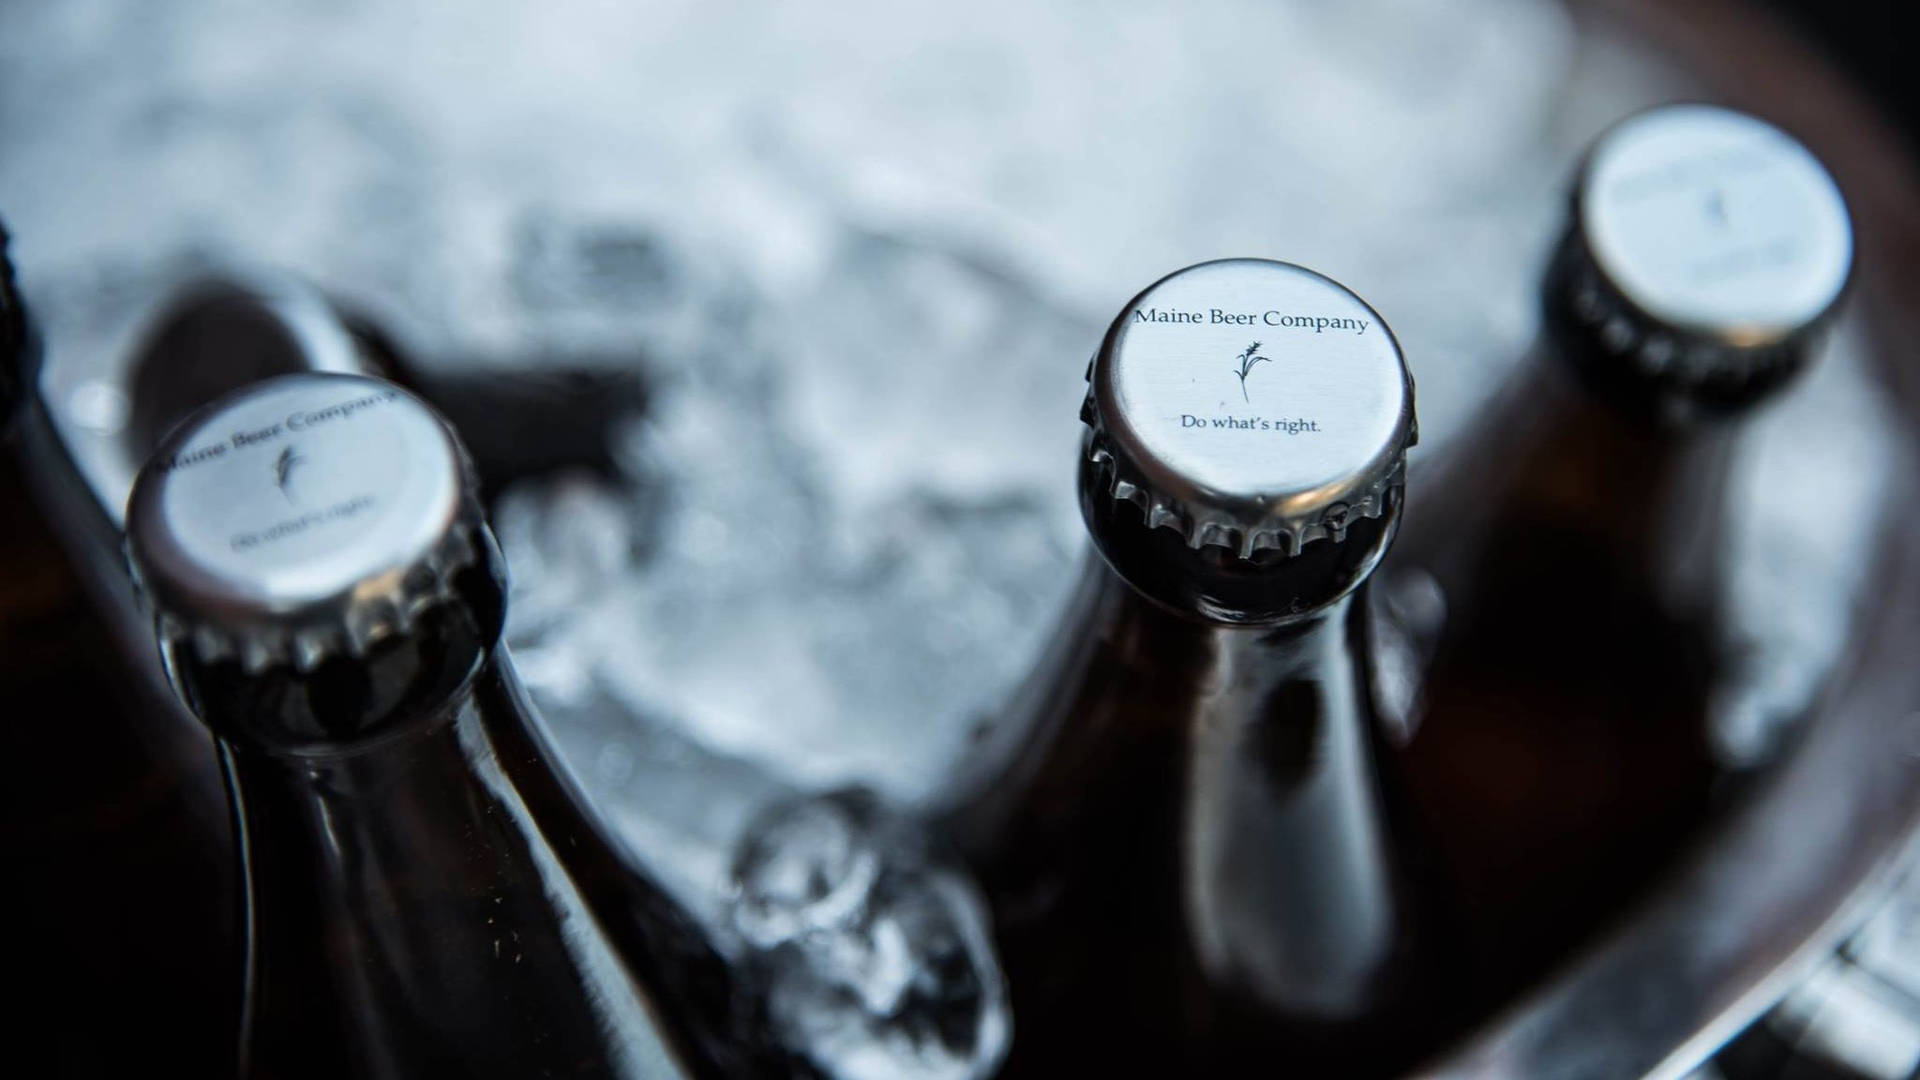 Maine Beer Company Bottle Caps On Ice Bucket Wallpaper